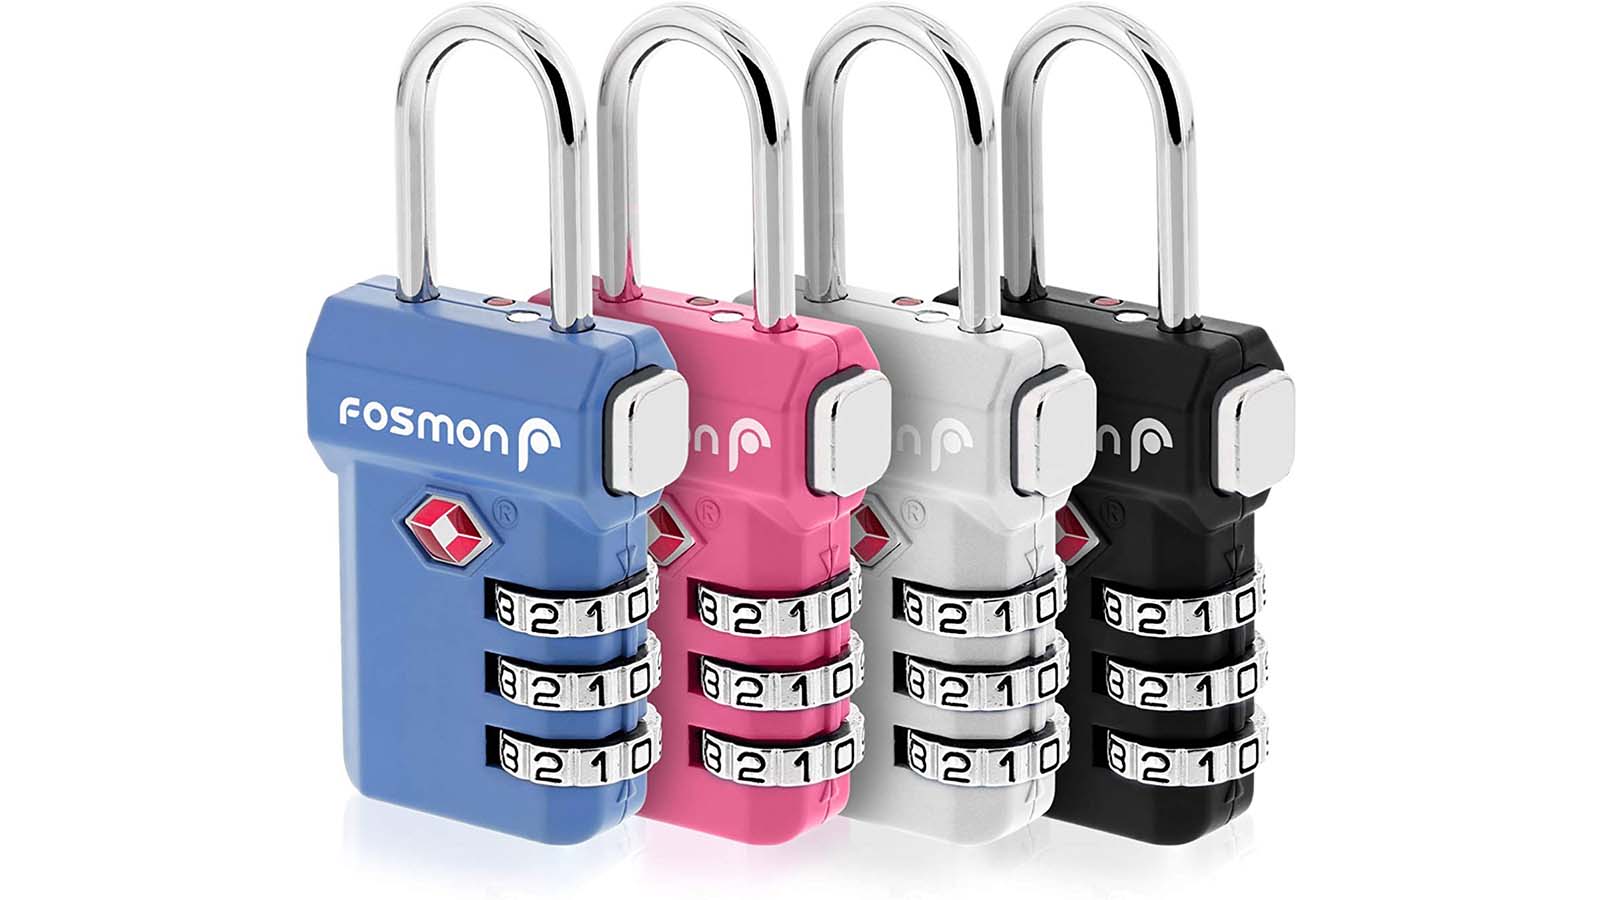 TSA Approved Luggage Locks, Ultra-Secure Dimple Key Travel Locks with Zinc  Alloy Body